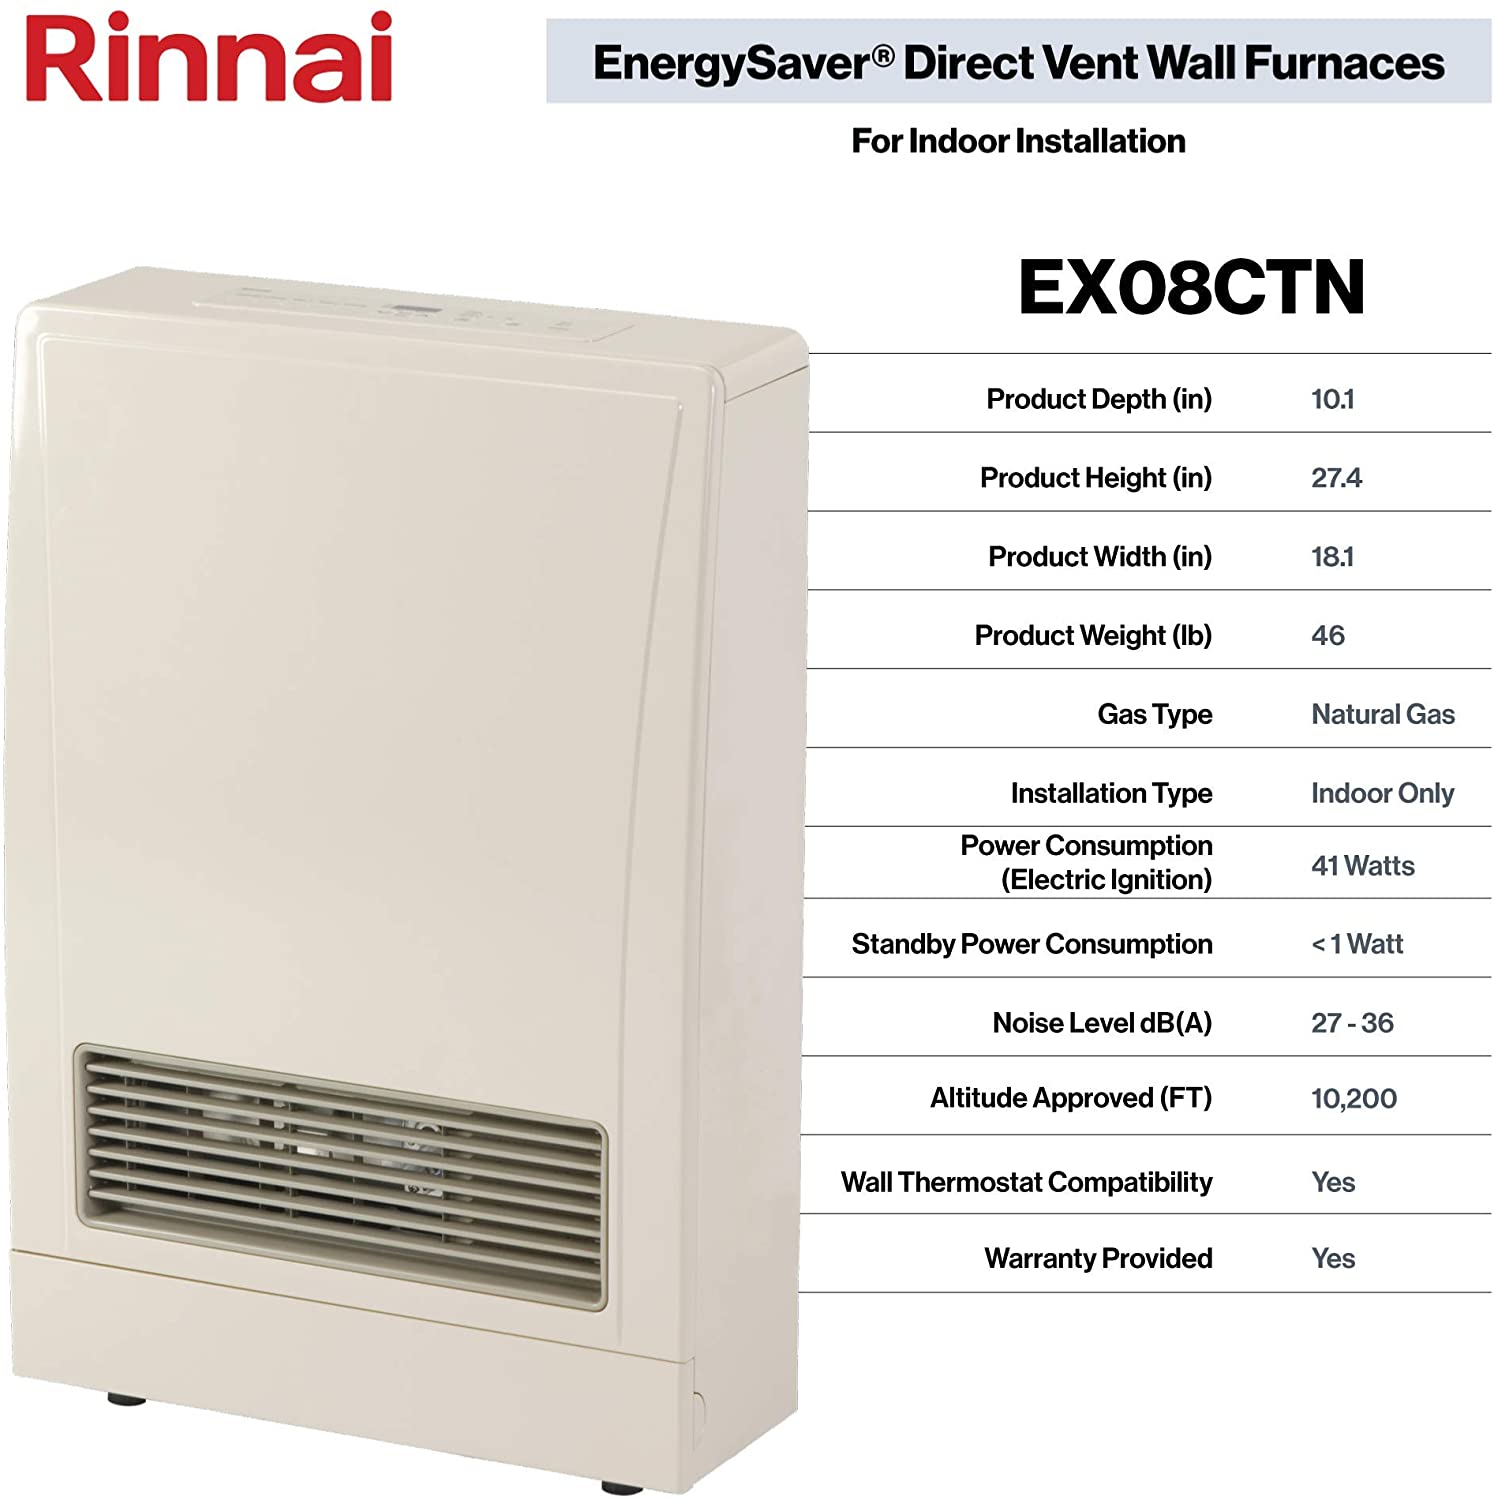 Rinnai 38400 BTU Direct Vent Natural Gas Wall Furnace (EX38CTN)